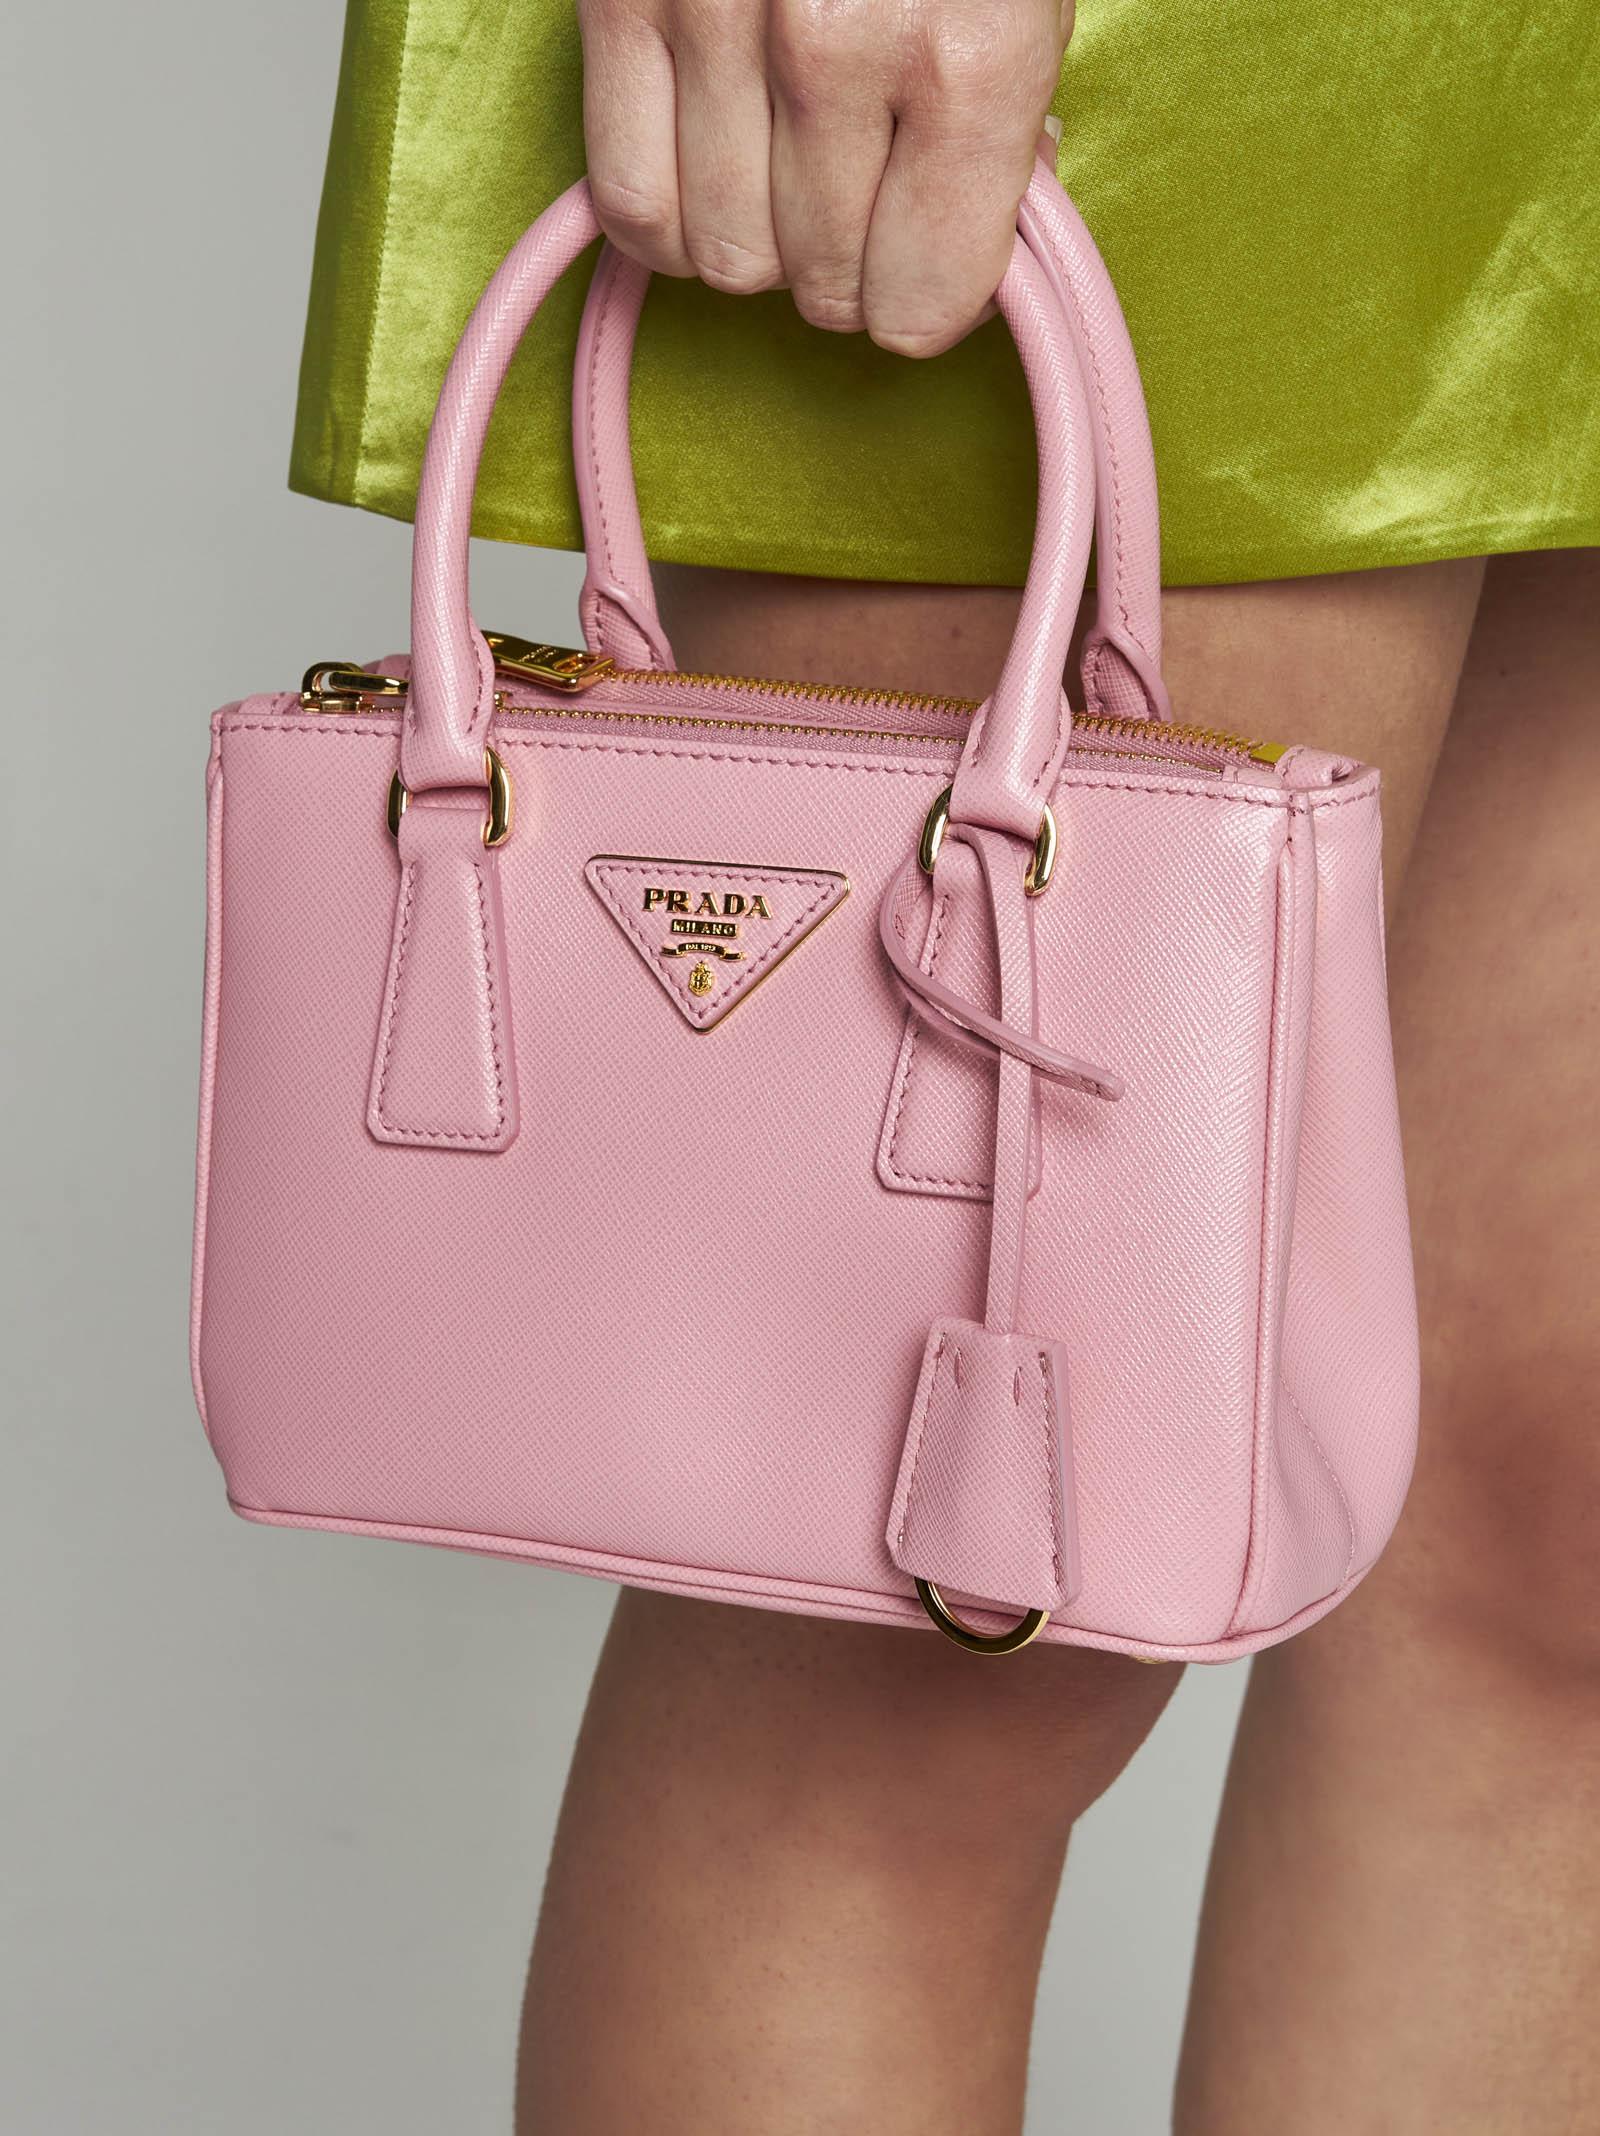 Prada Galleria Micro Saffiano Leather Bag in Pink